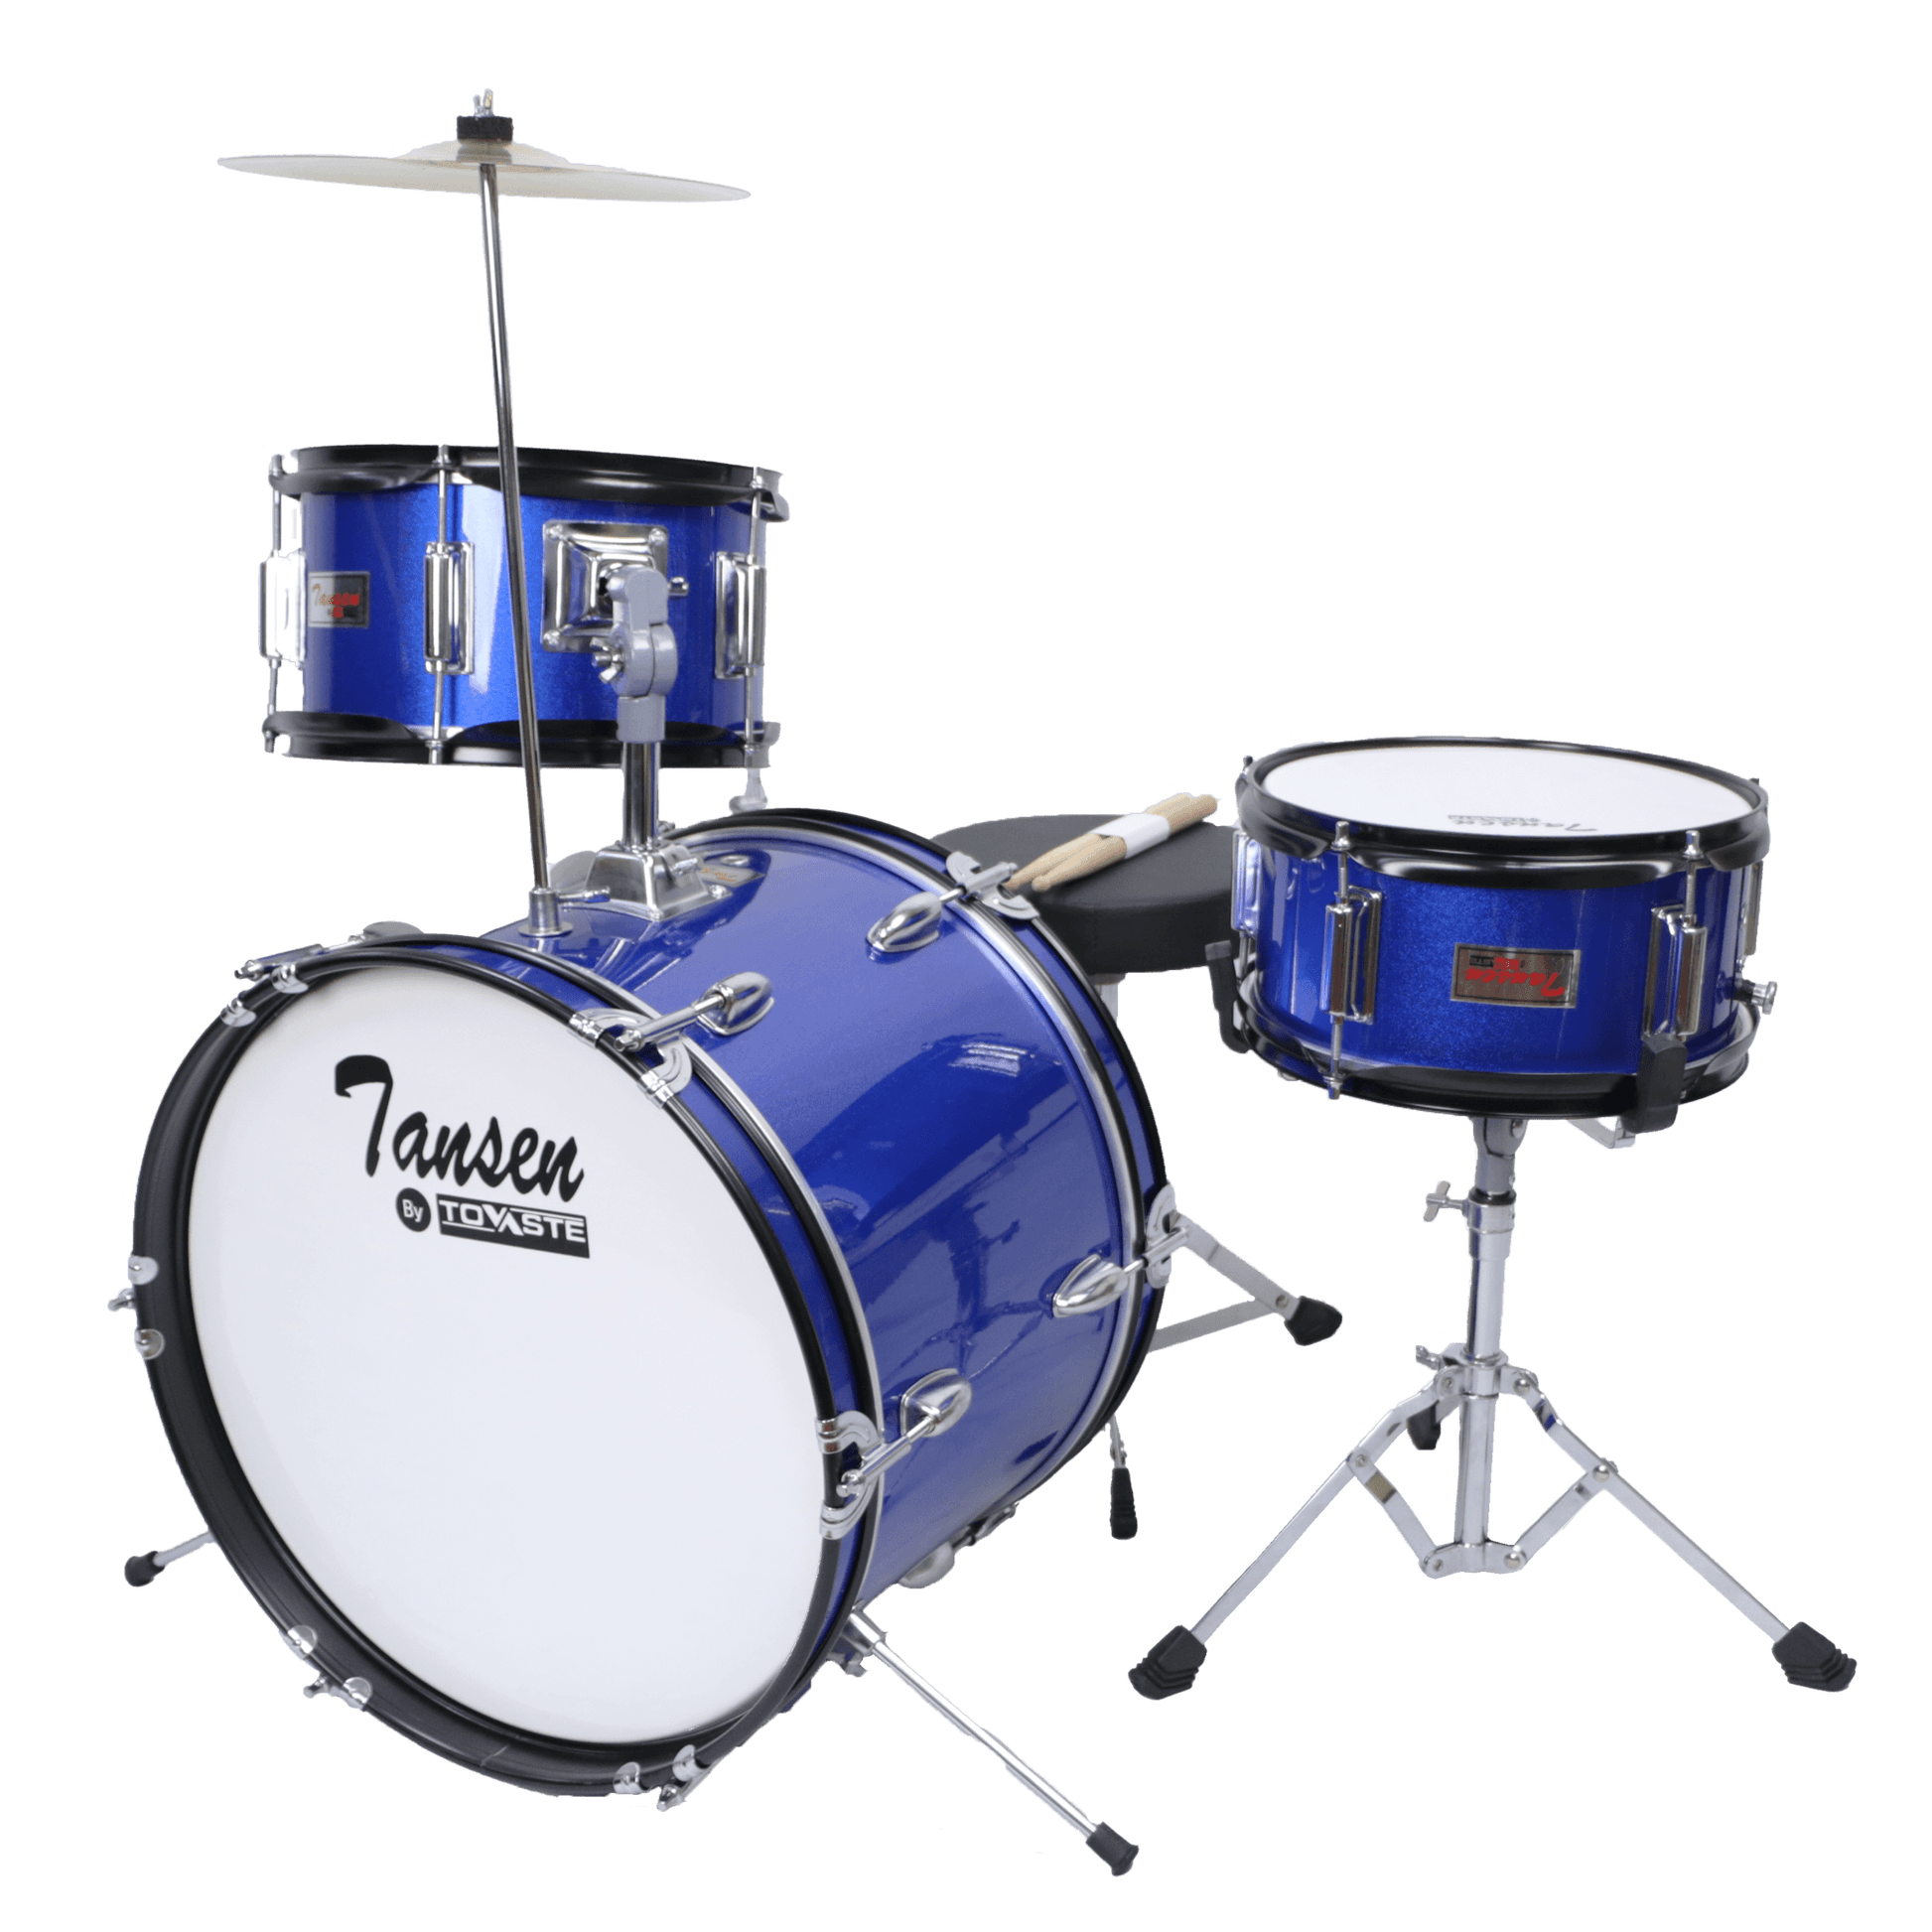 Tovaste J1042 Junior Drum Kit with Throne & Cymbal (Jumbo) - MusicMajlis